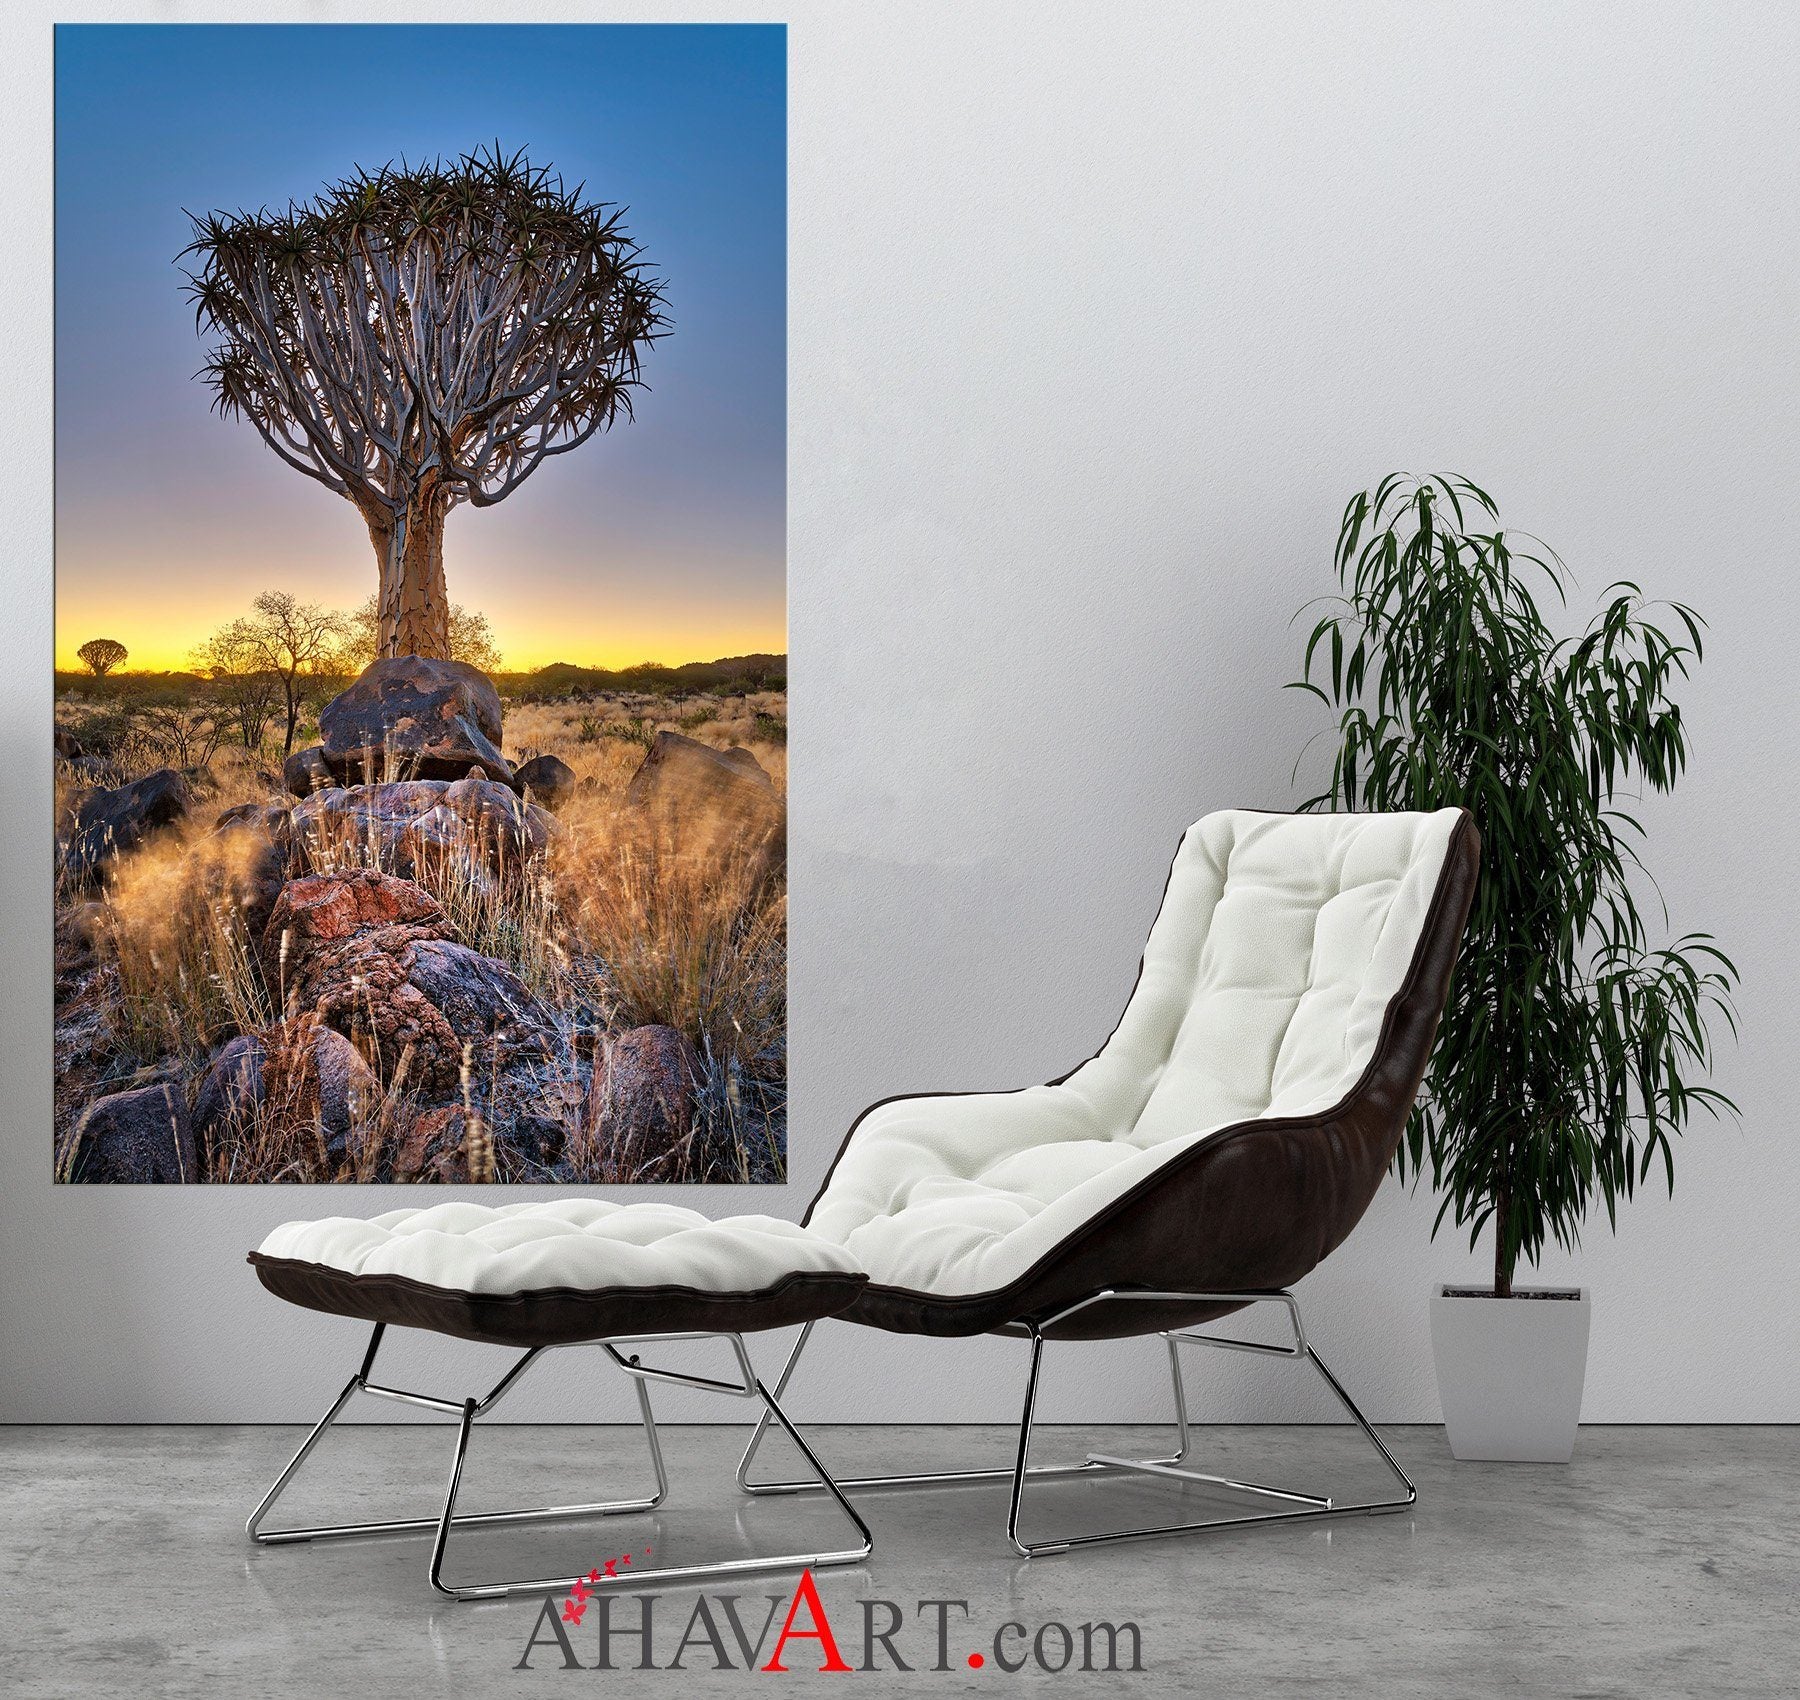 Quiver Tree - South Africa / Patrick Huot Fine Art Photography AHAVART 